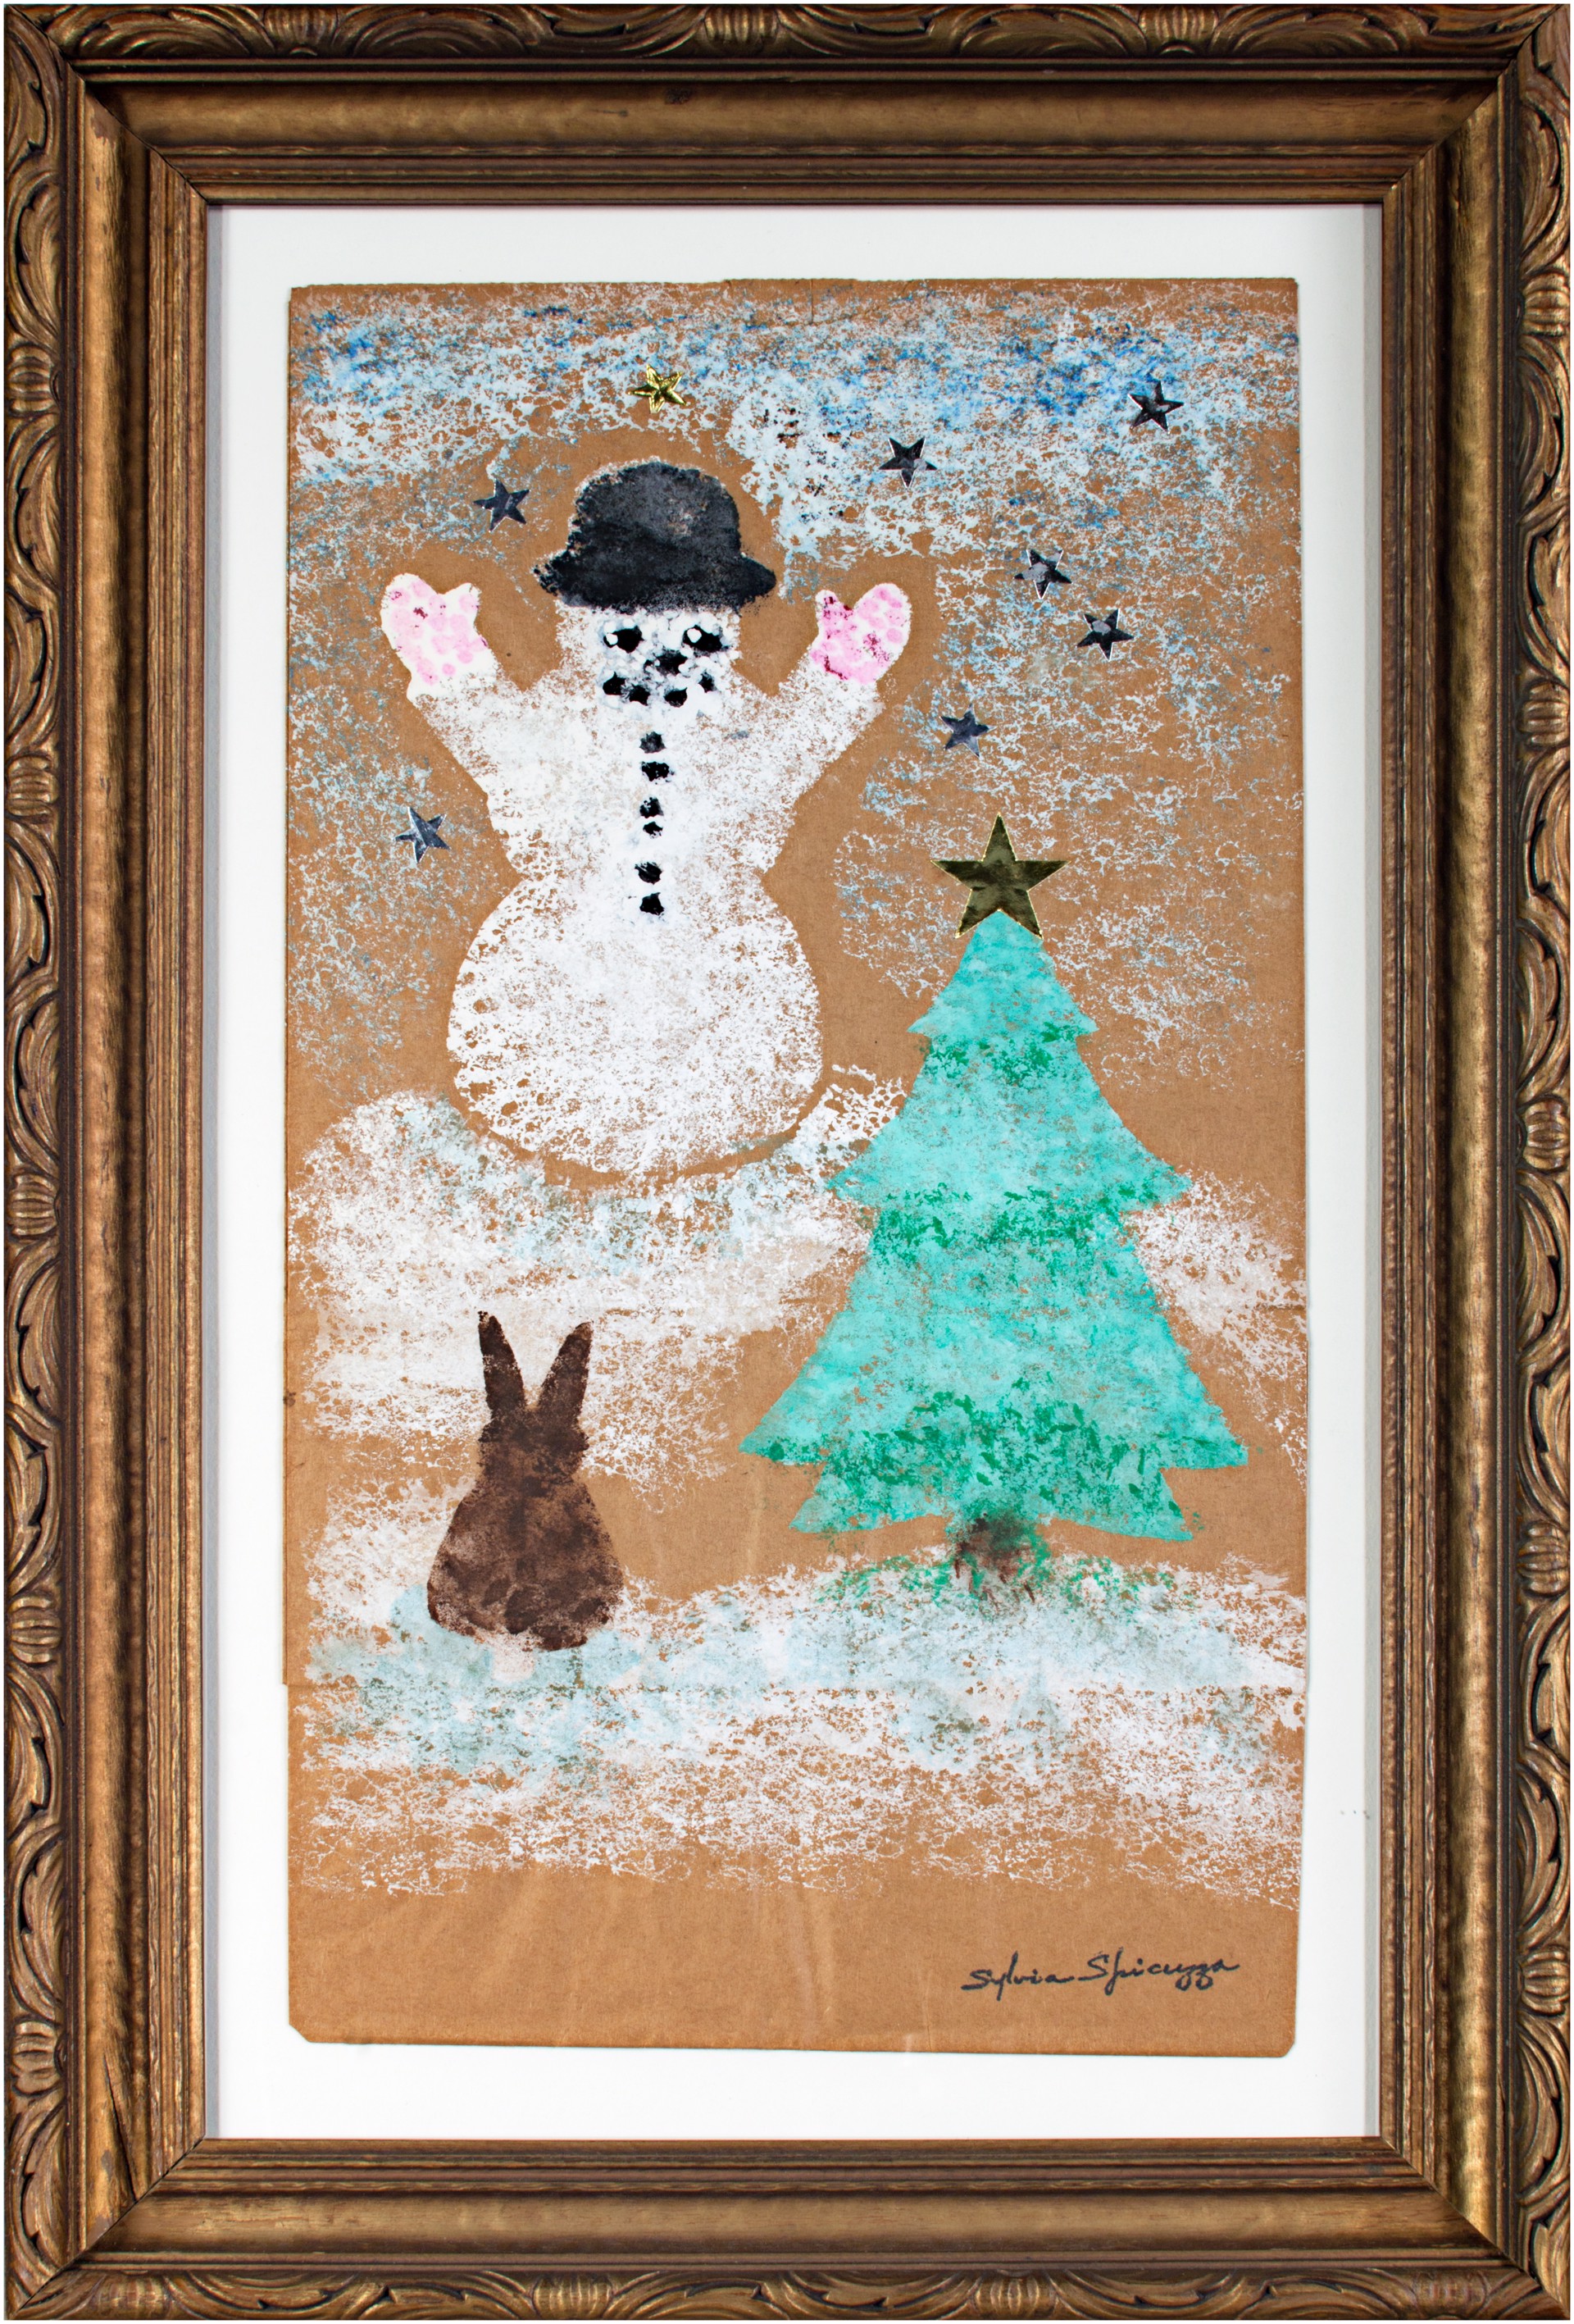 Winter Wonderland (Snowman, Pine Tree, Rabbit) by Sylvia Spicuzza